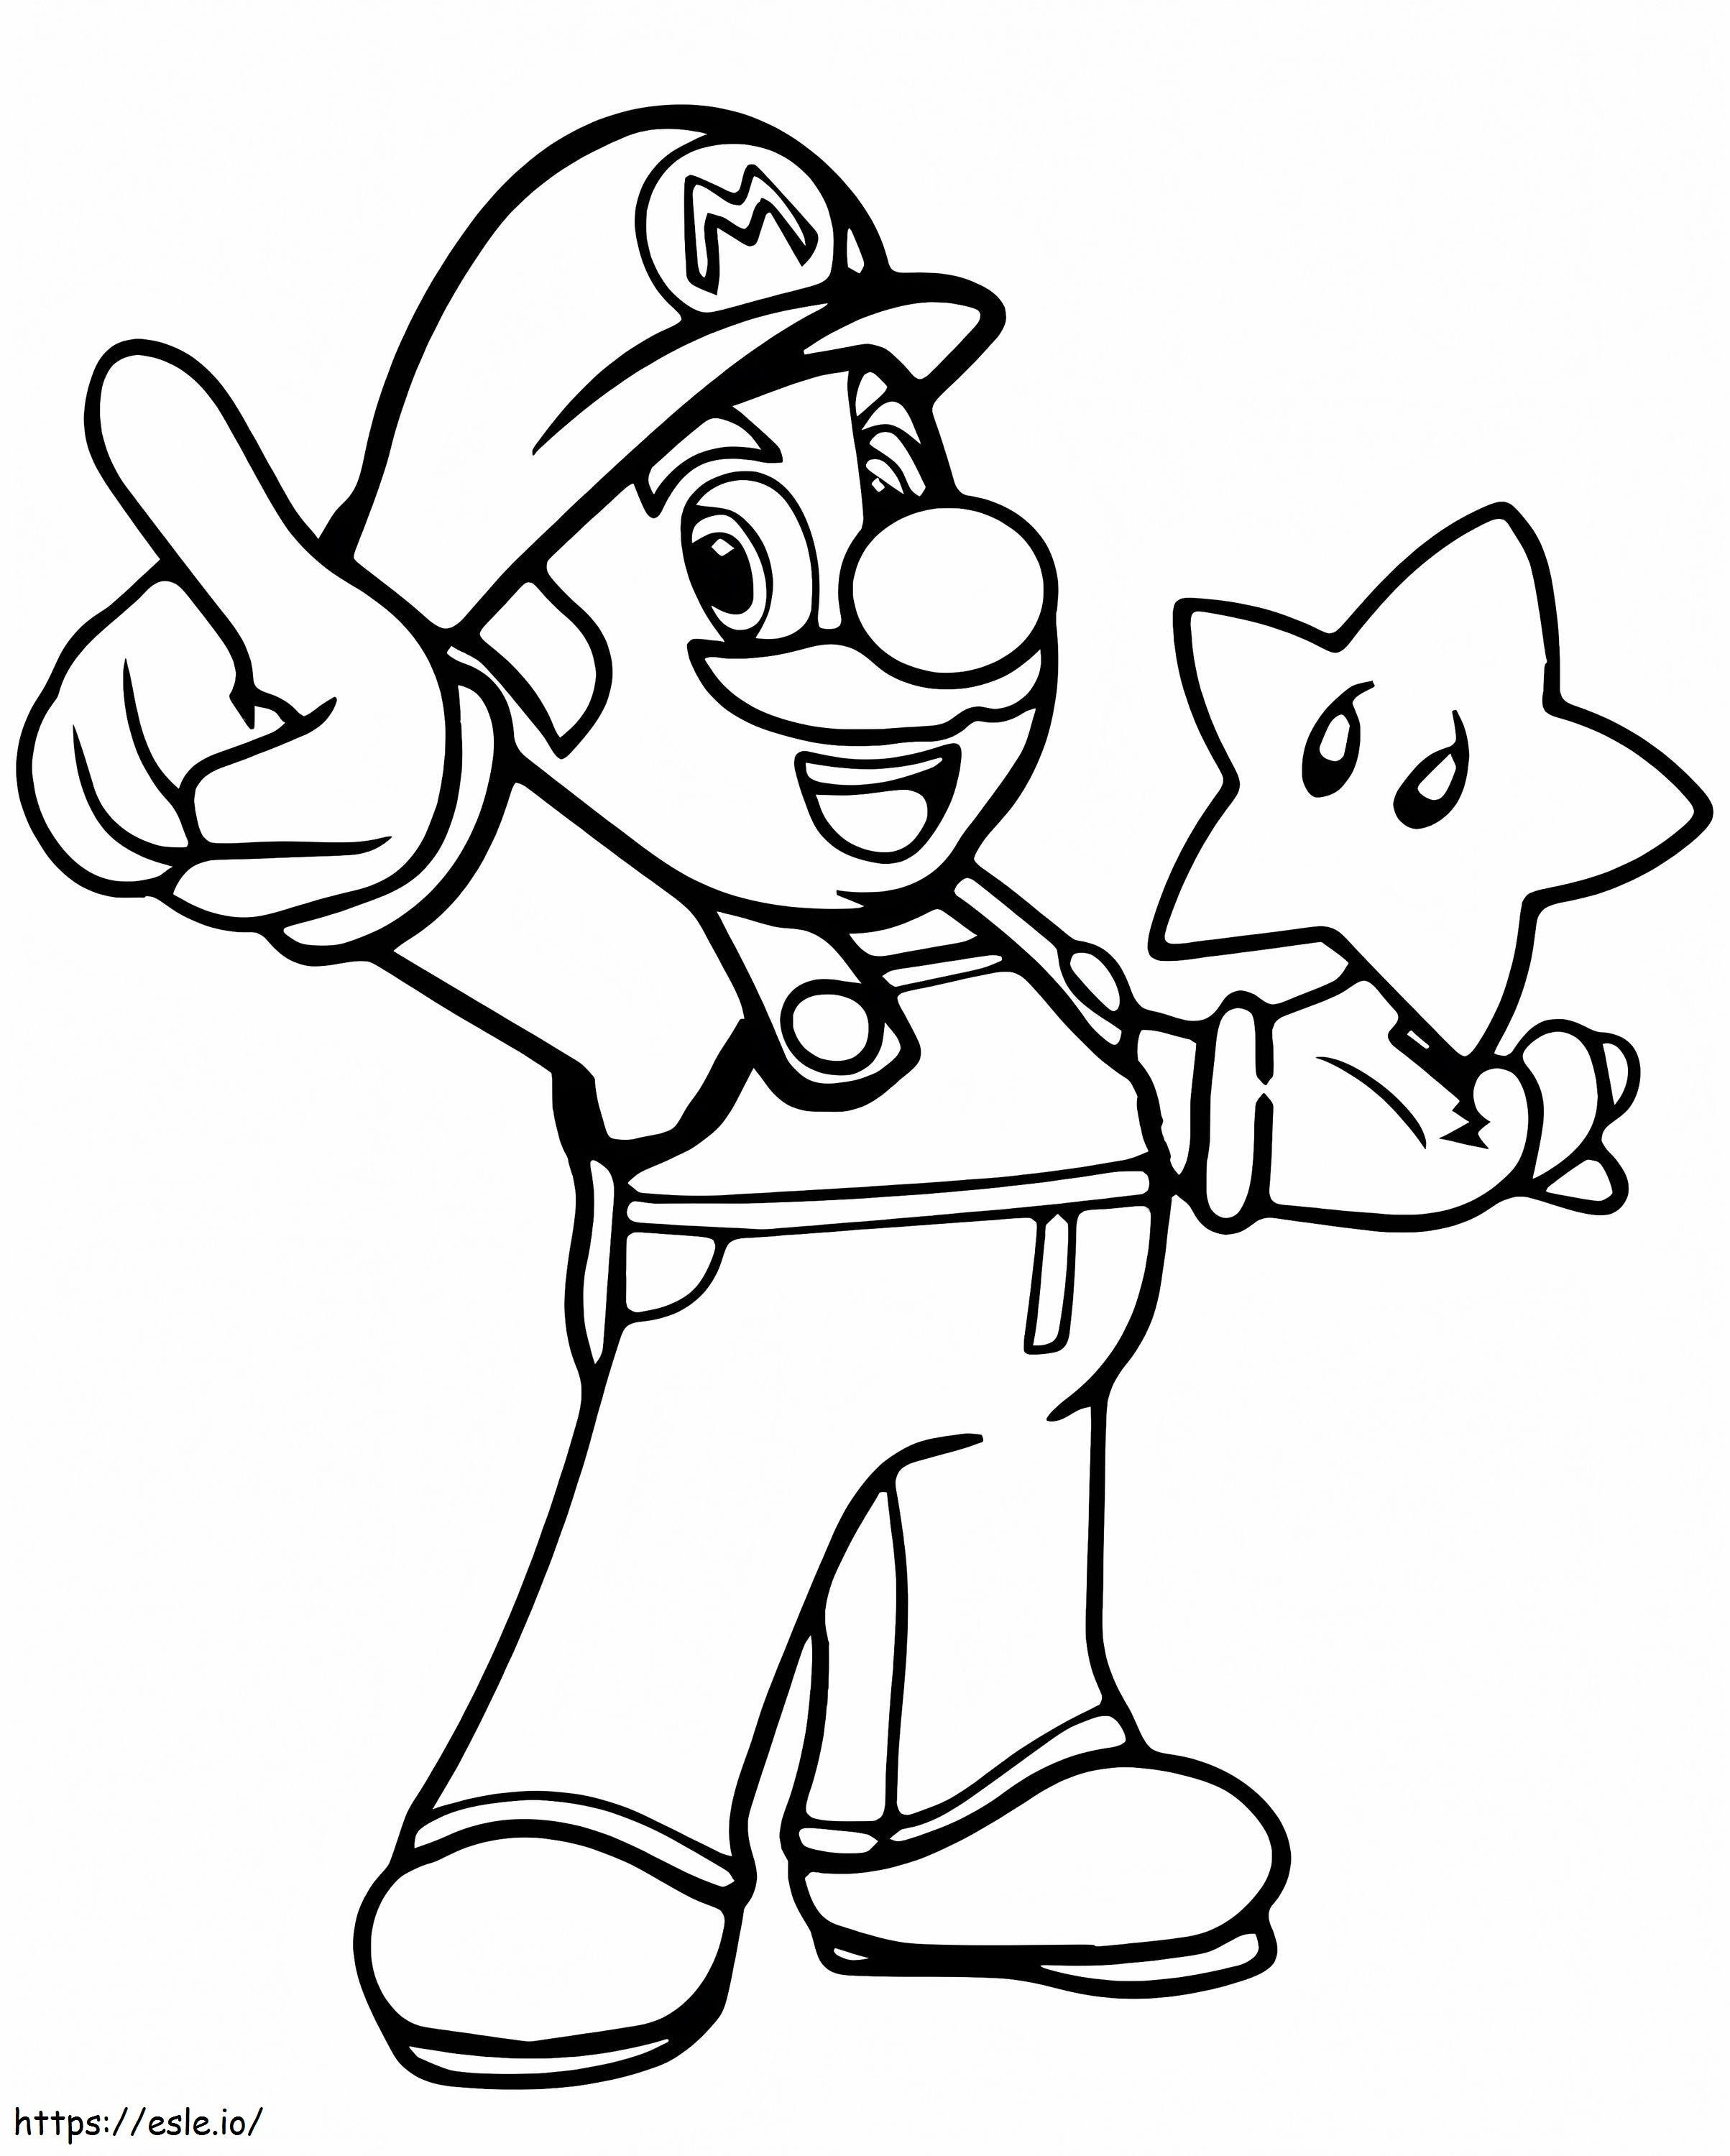 Mario și Star de colorat